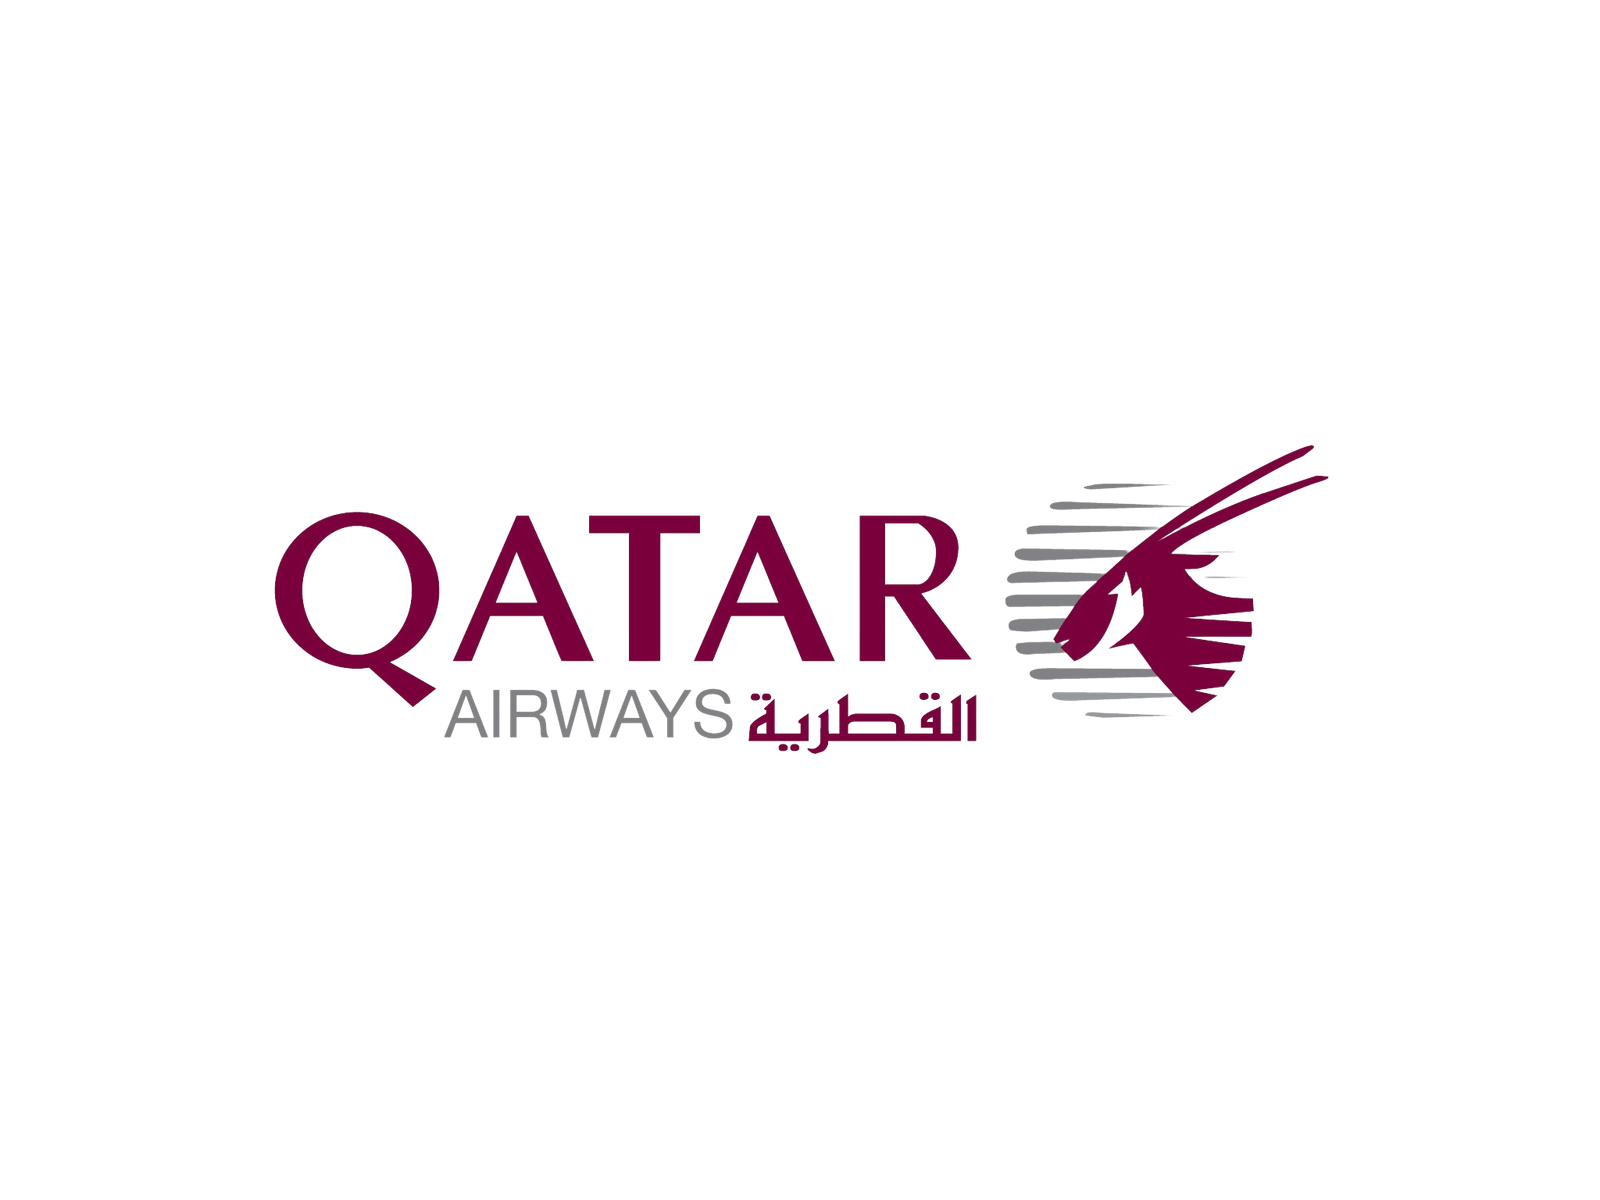 Qatar_Airways-removebg